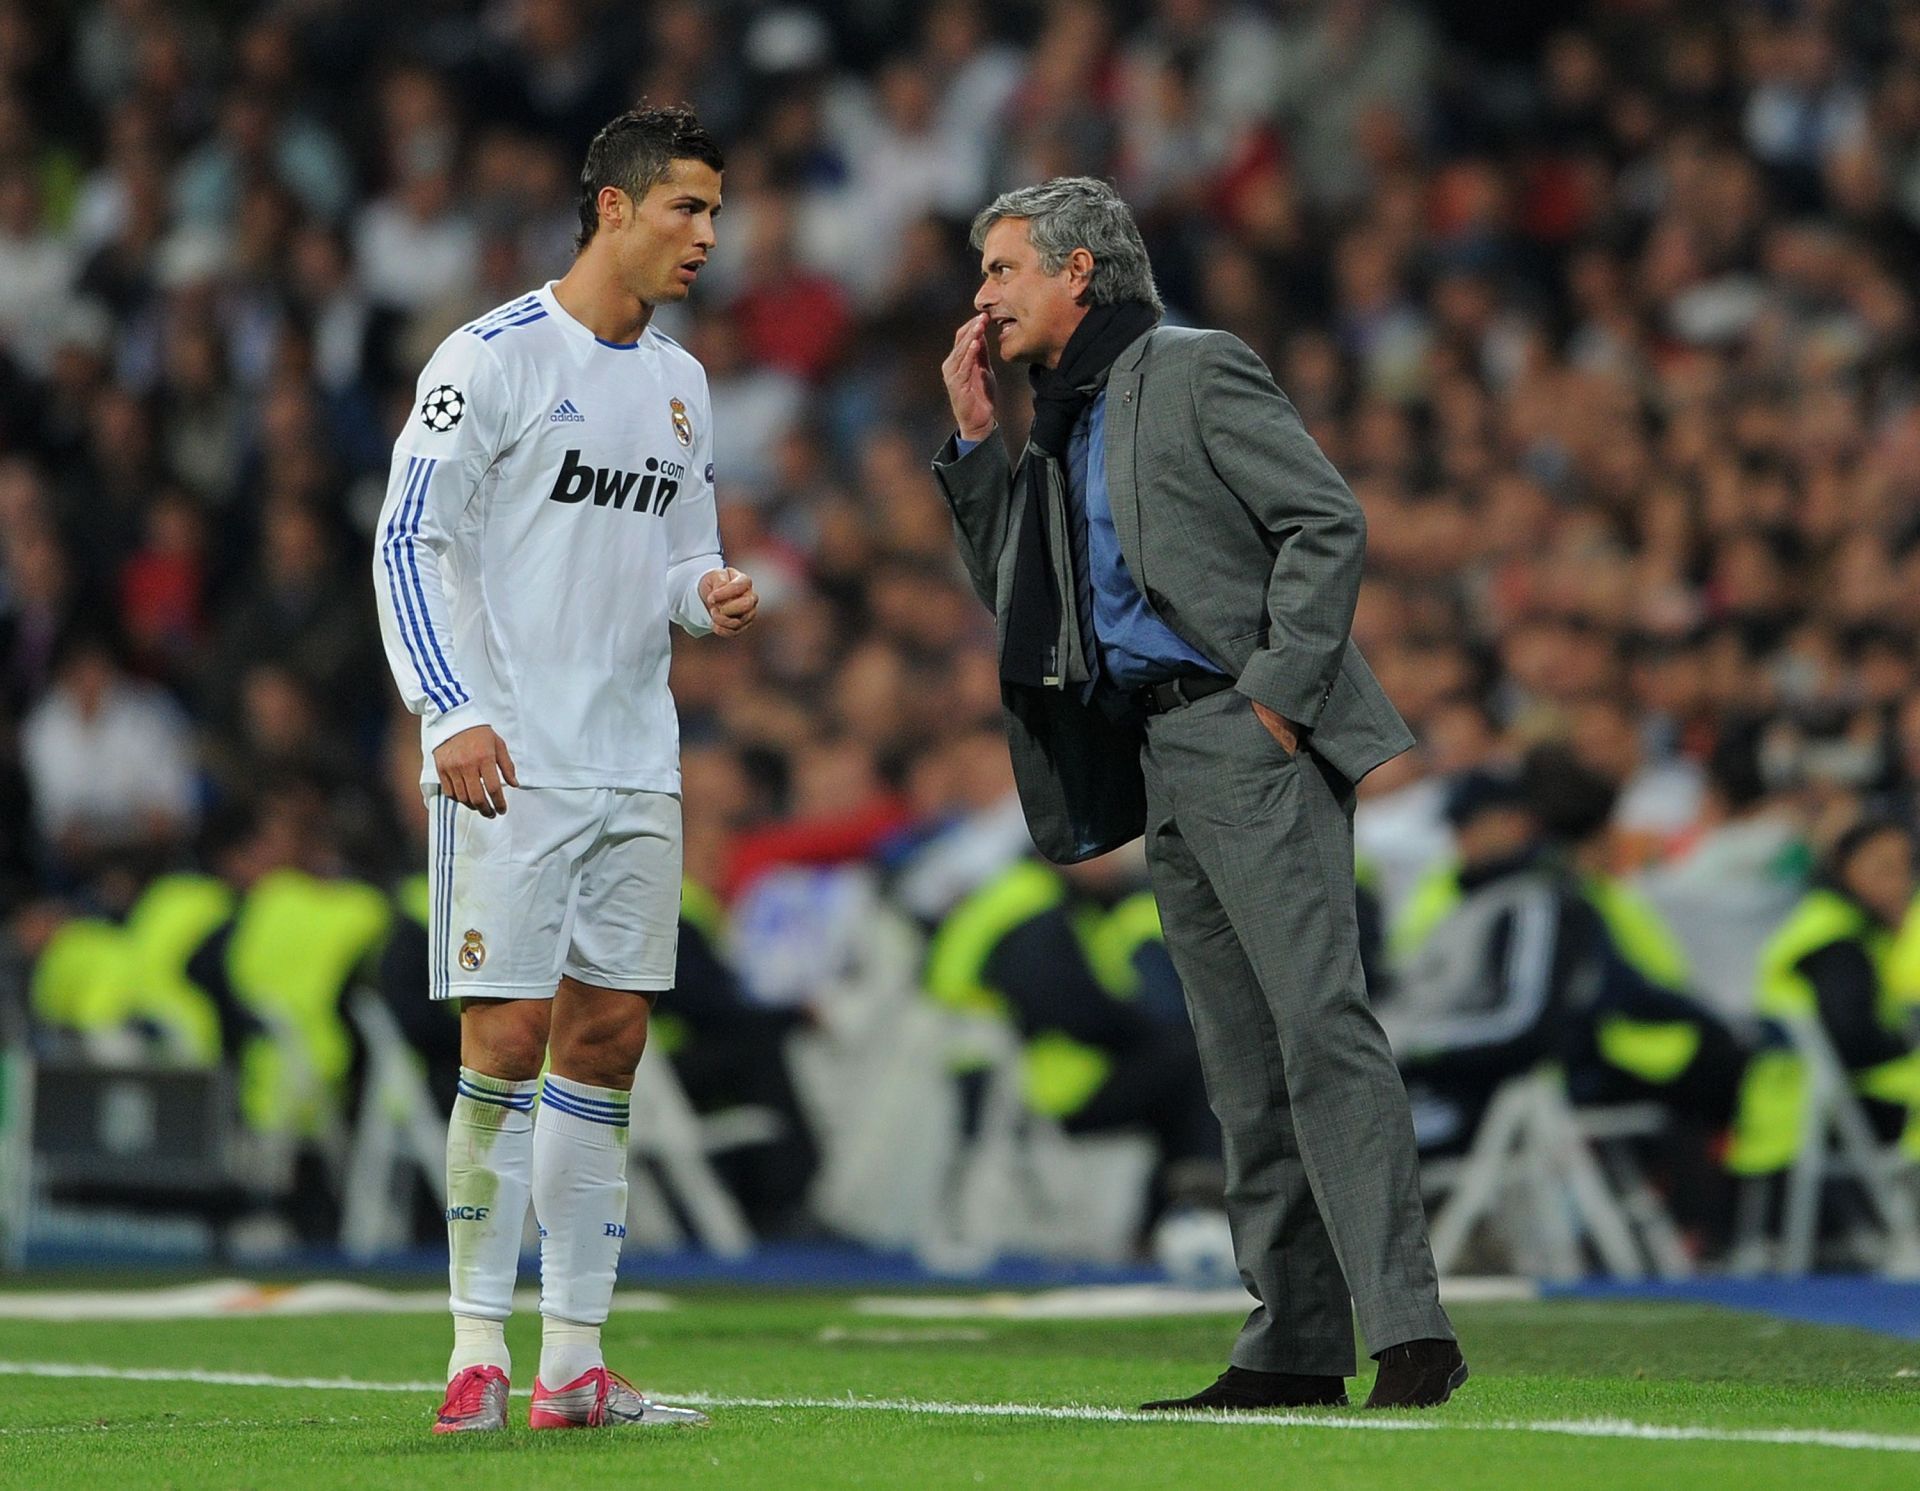 Cristiano Ronaldo (L) and Jose Mourinho in discussion at the Bernabeu.